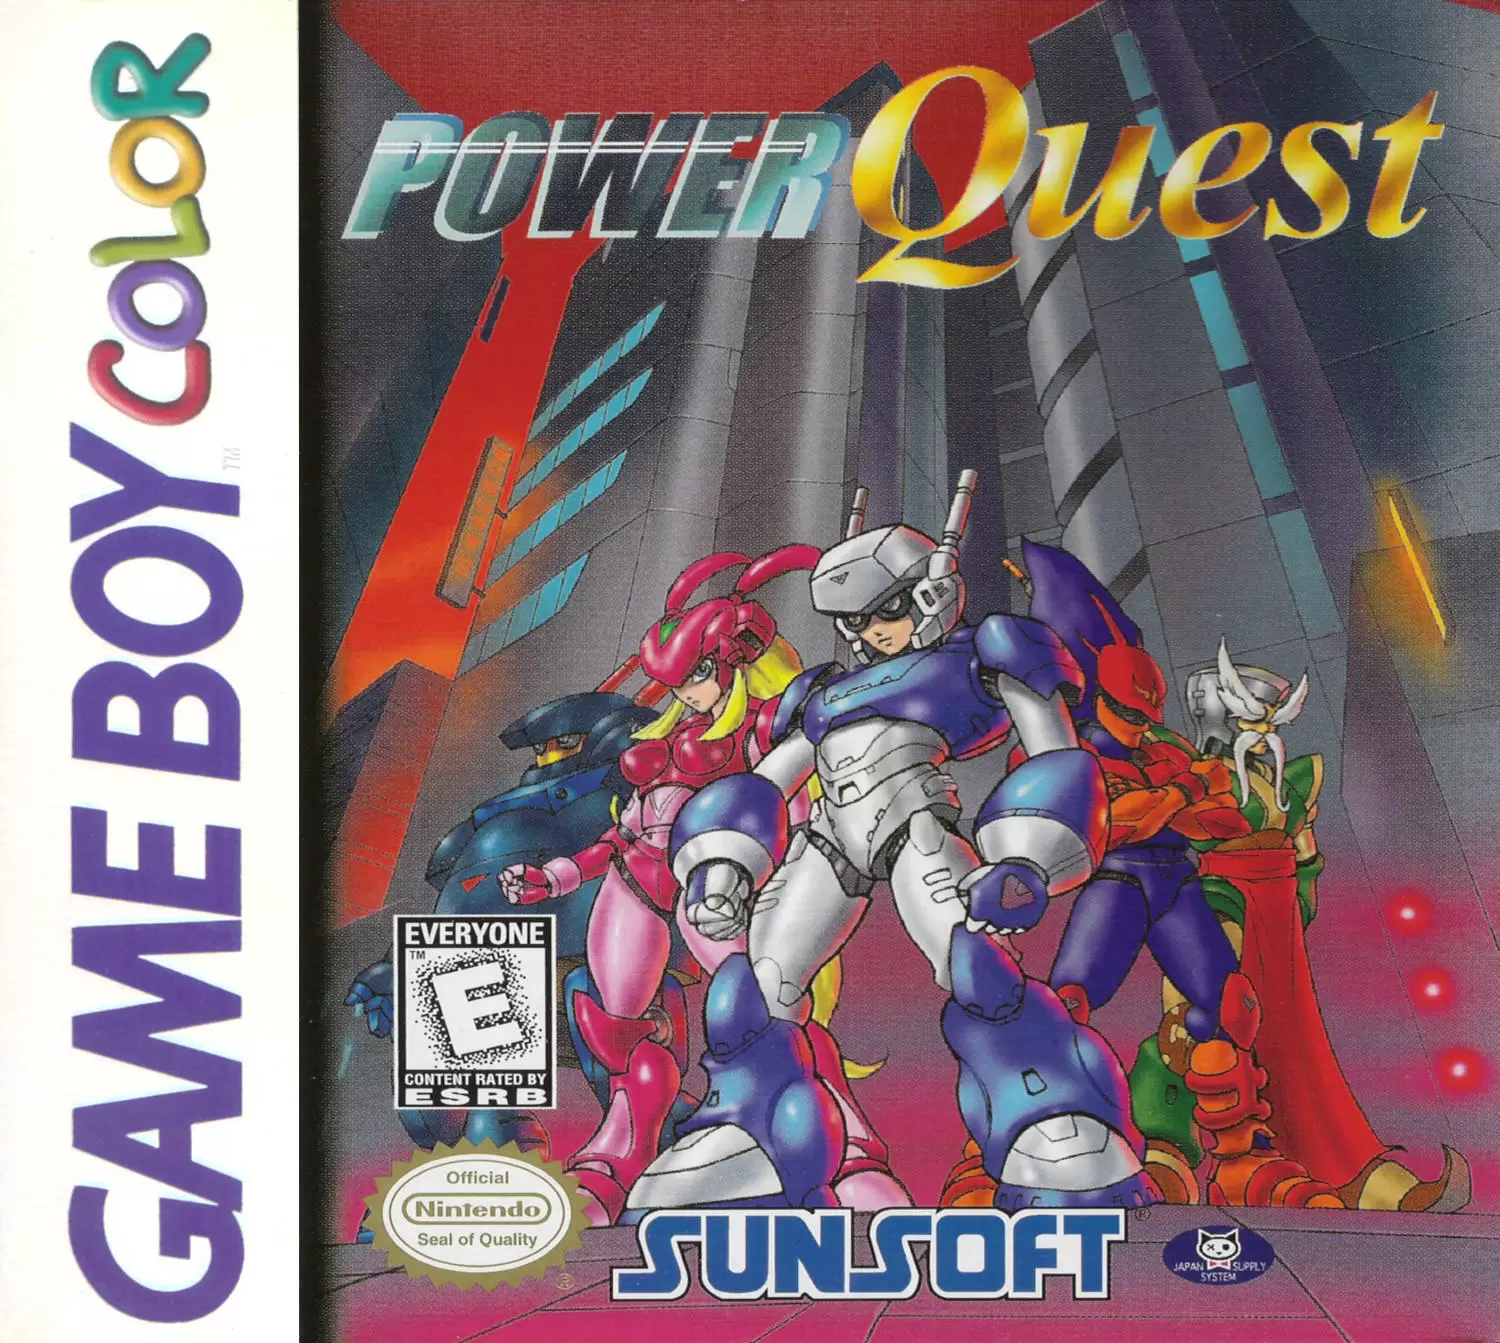 Game Boy Color Games - Power Quest